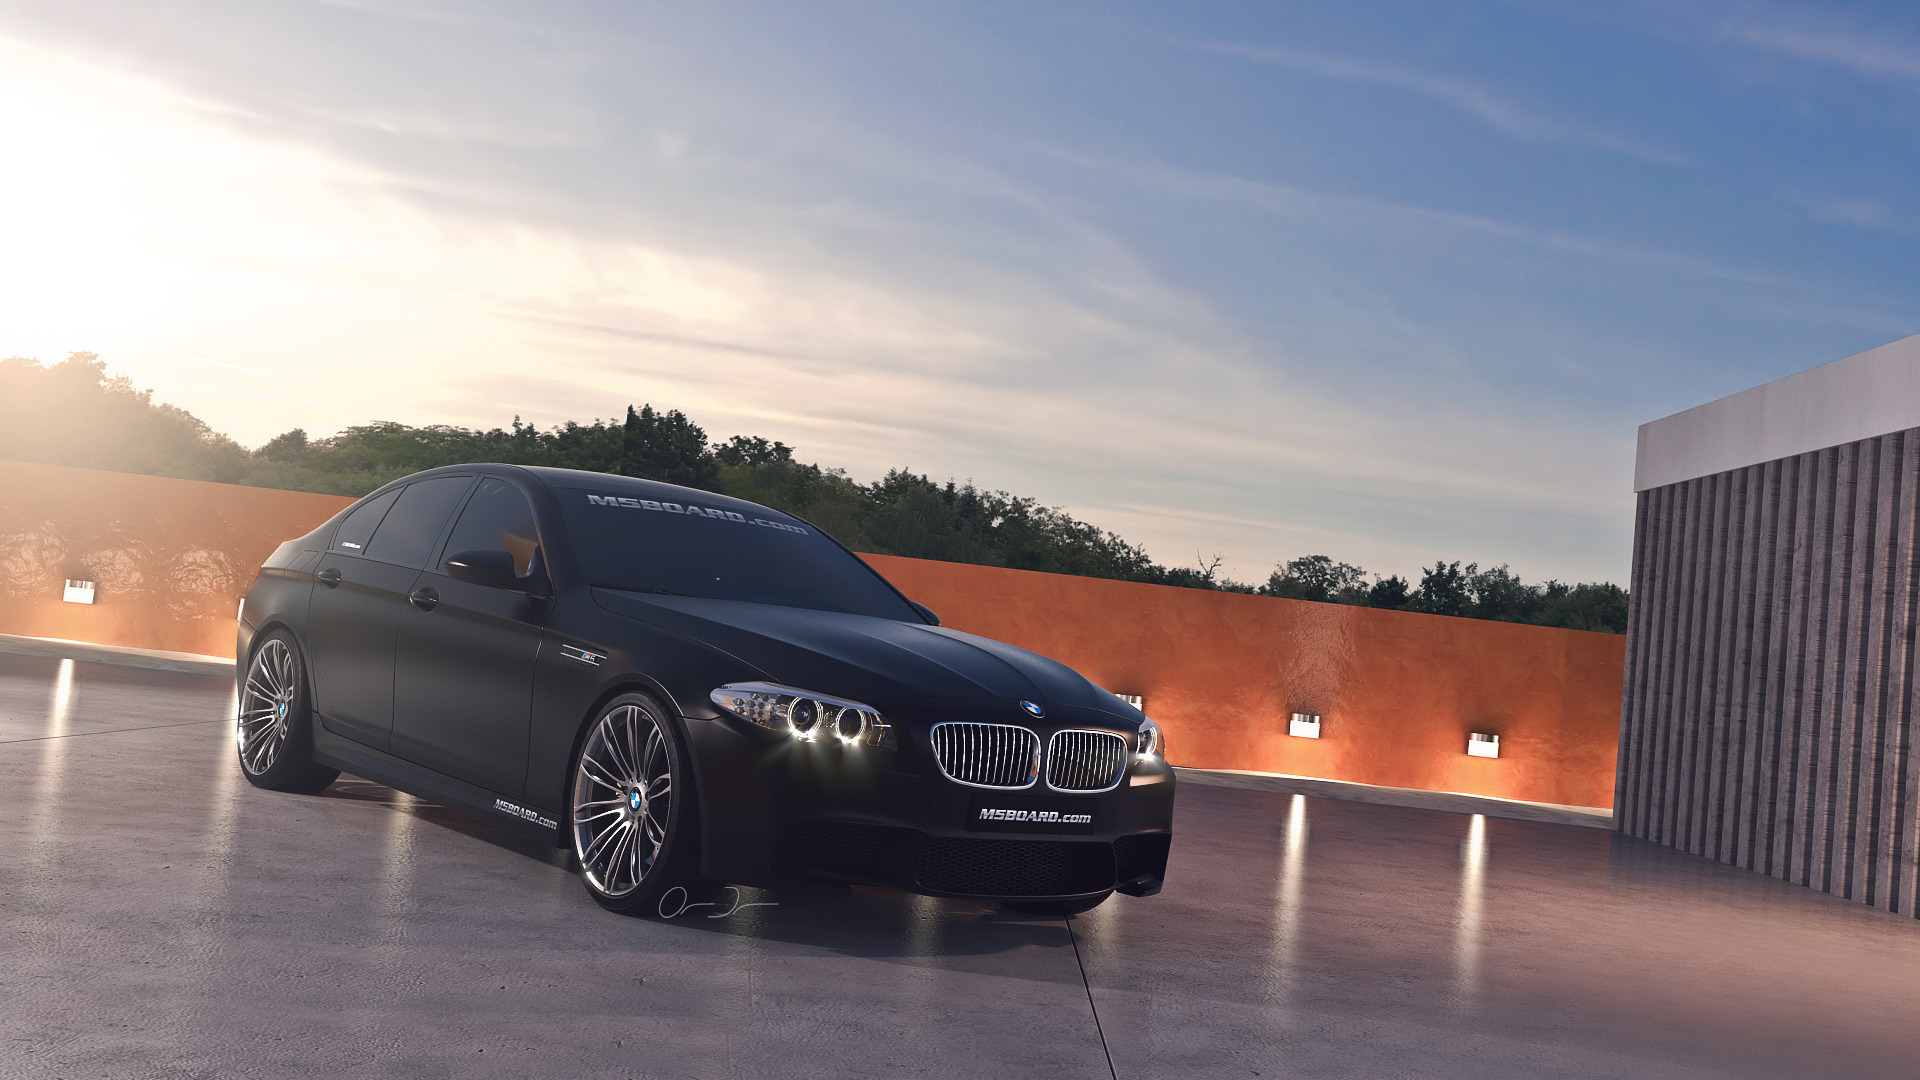 Фото м5 на обои. BMW m5 f10. BMW m5 f10 Black. BMW 7 f10. BMW f10 черная.